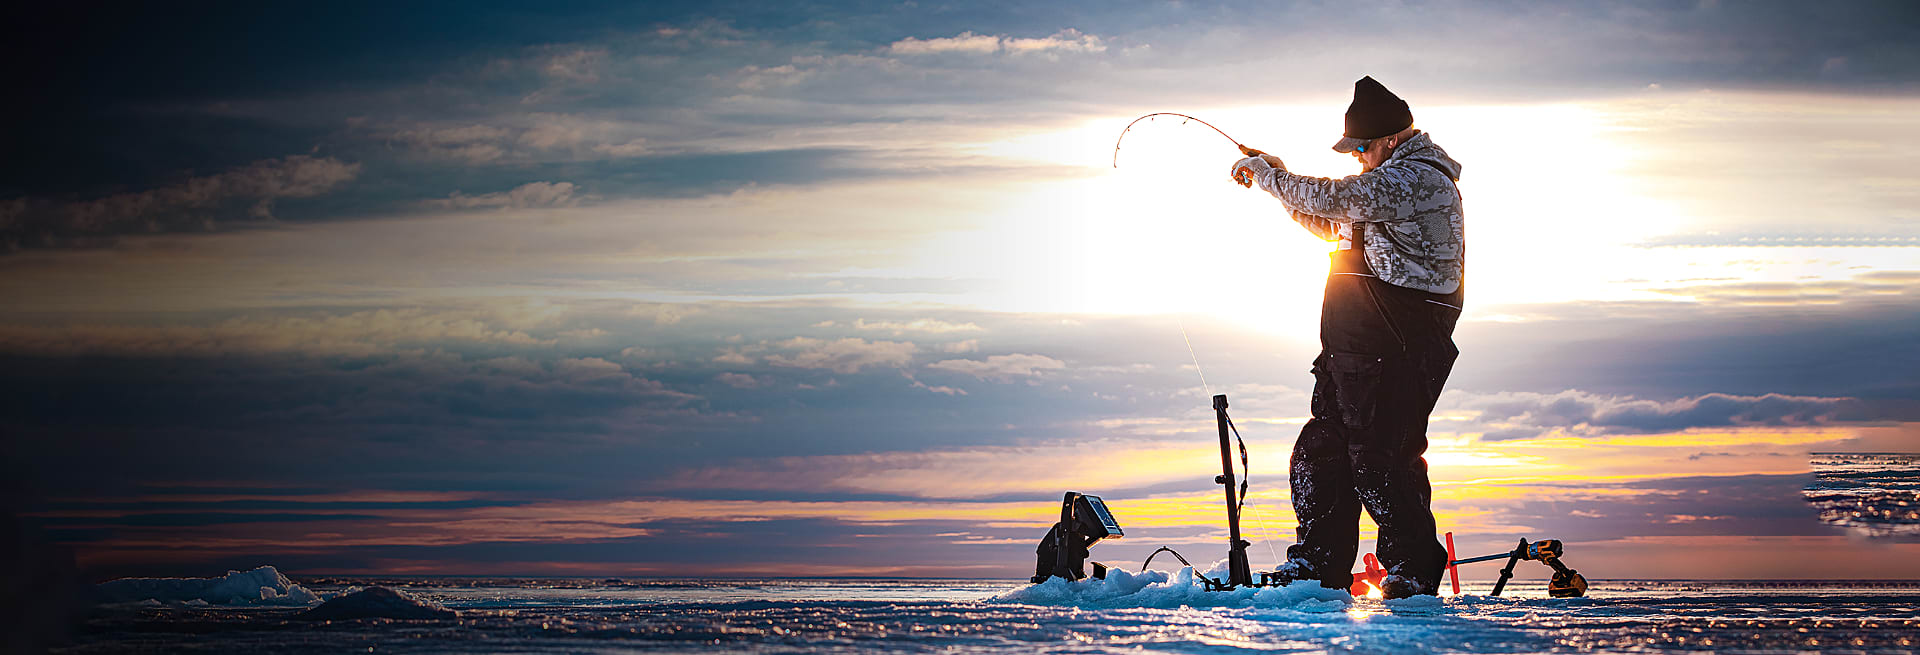 Ice Fishing Gear - Ice Fishing Equipment - Ice Fishing Tips